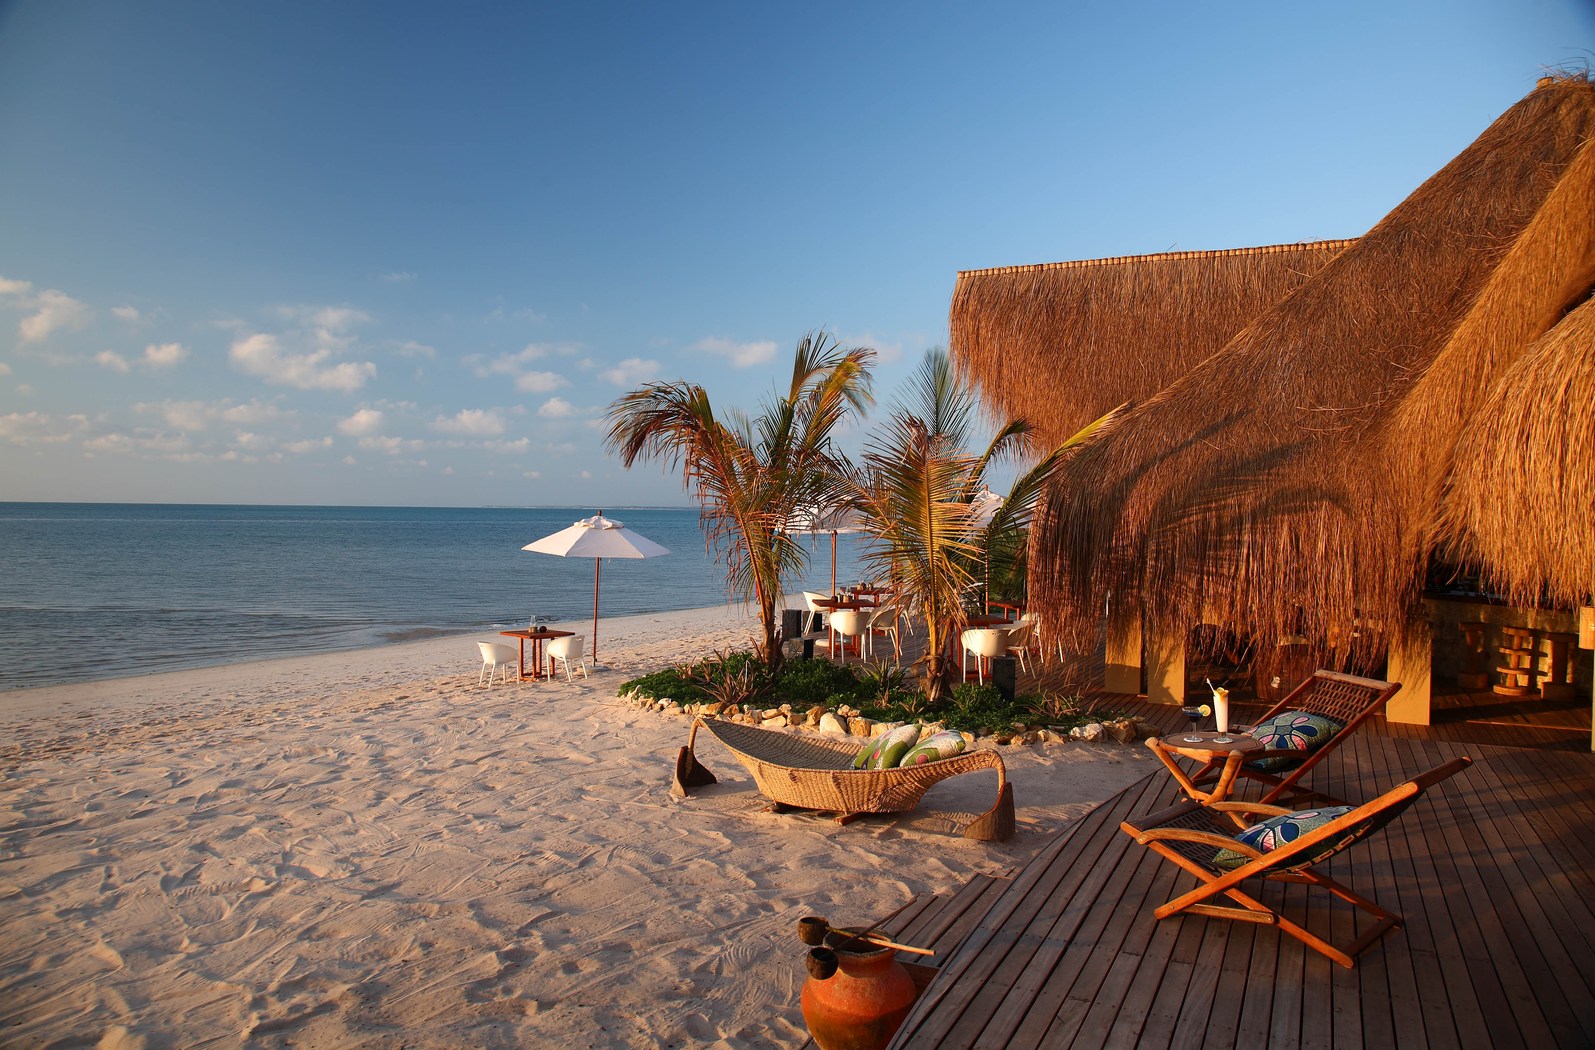 The beach and bar at Azura Benguerra, Mozambique